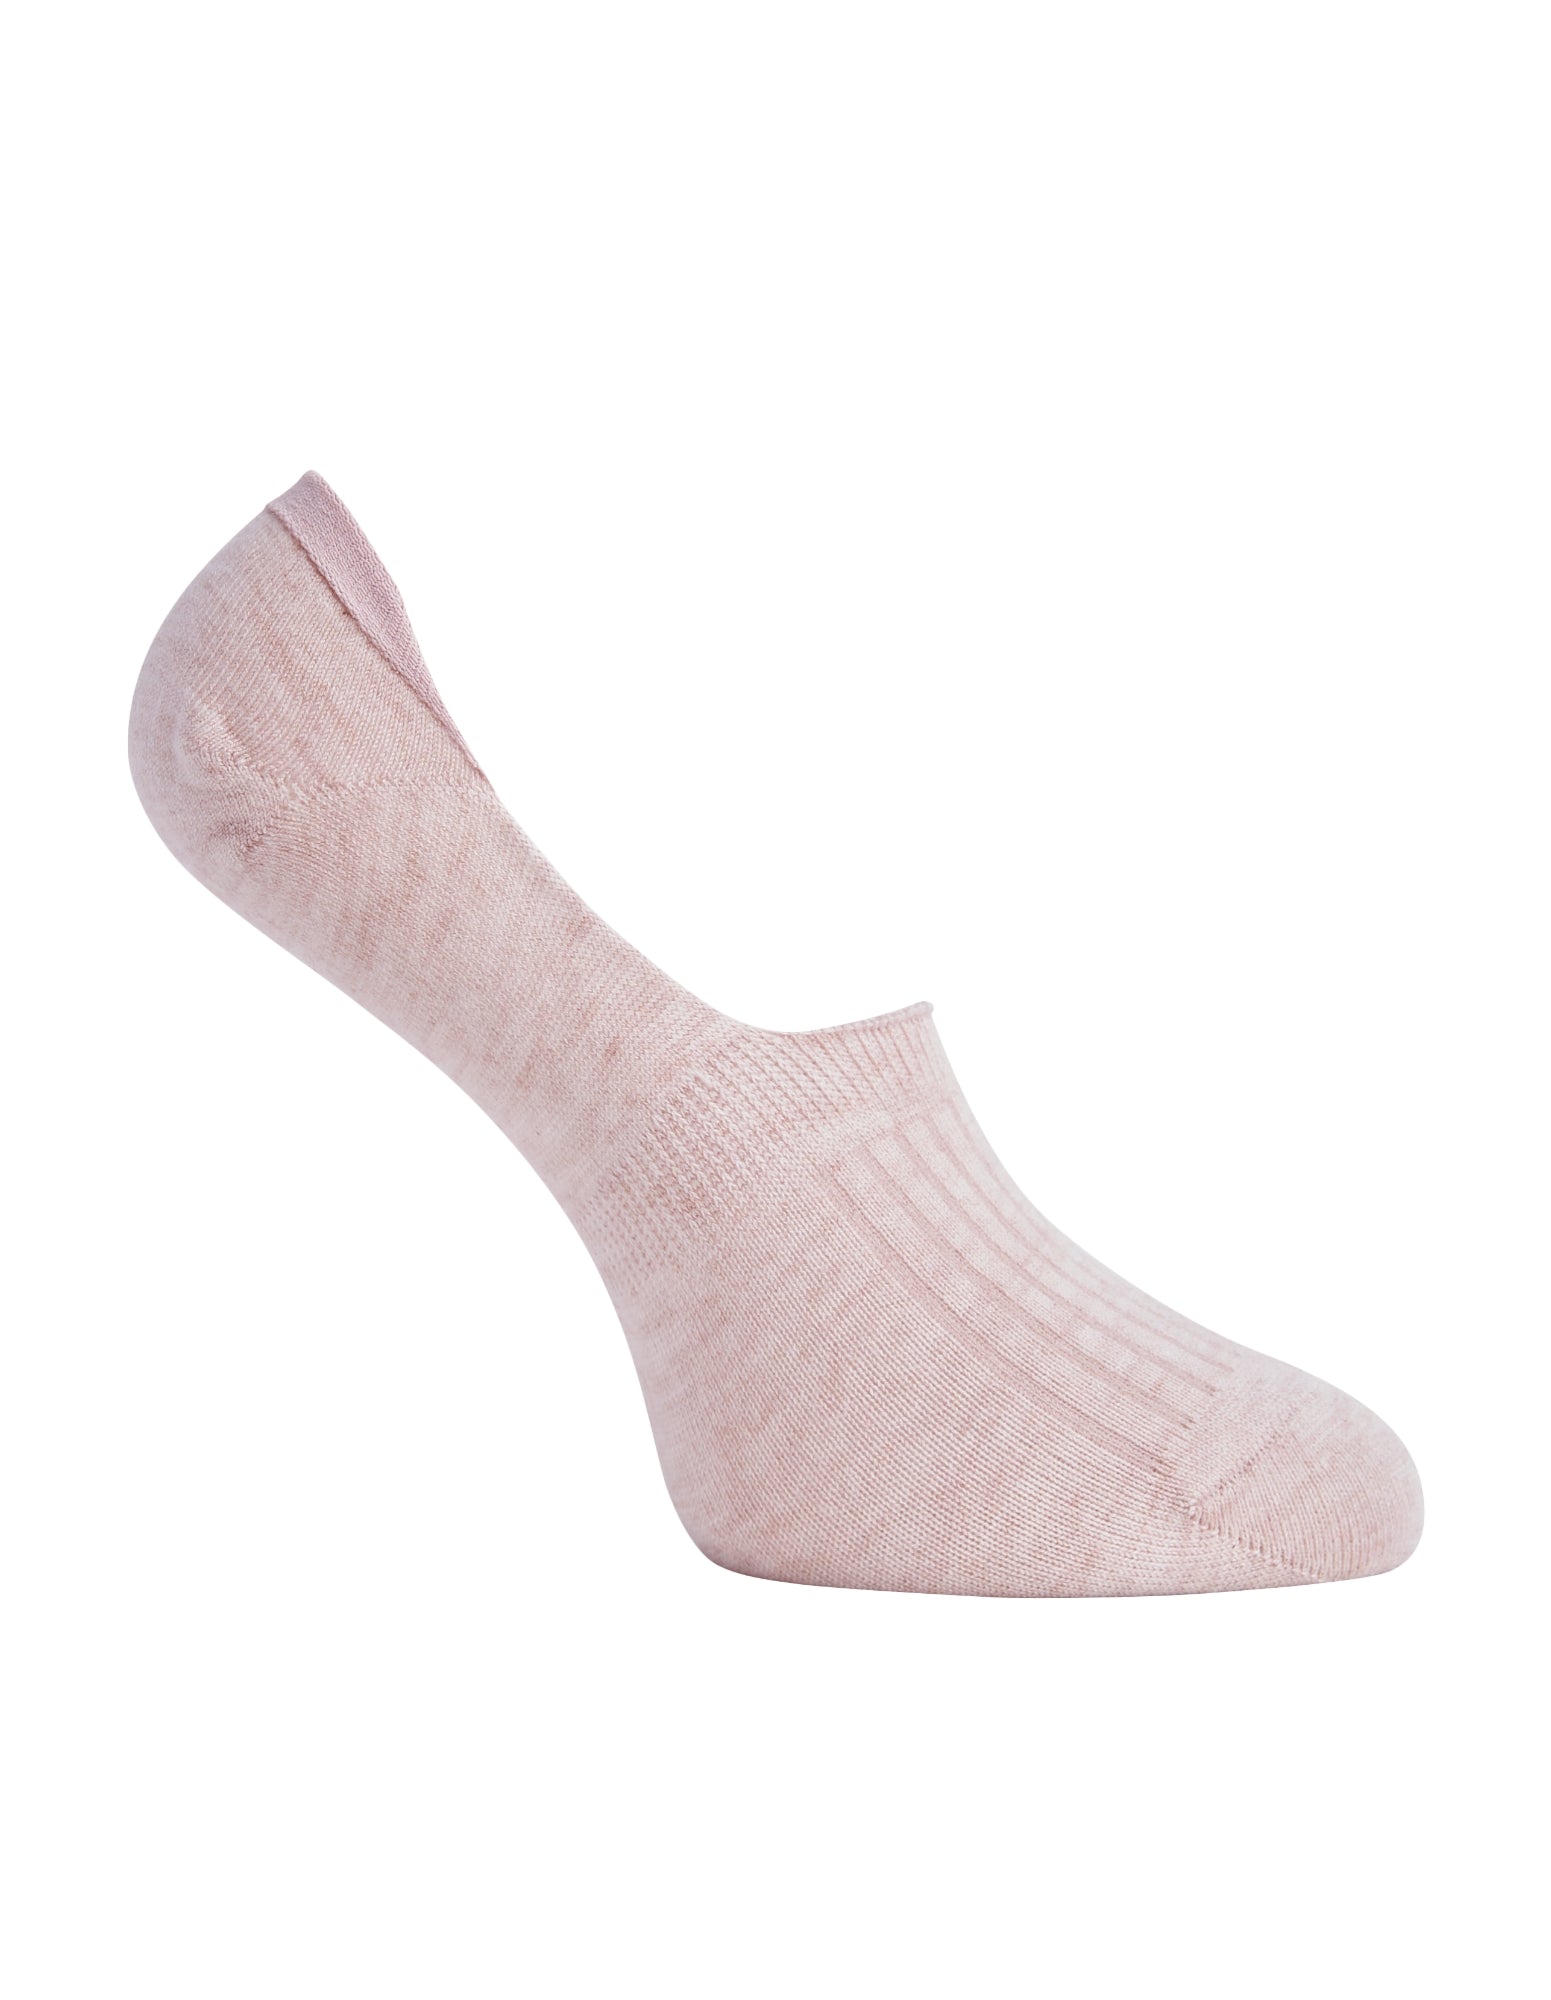 Side of Simon de Winter Women's Textured Wool No Show Socks in Smokey Rose